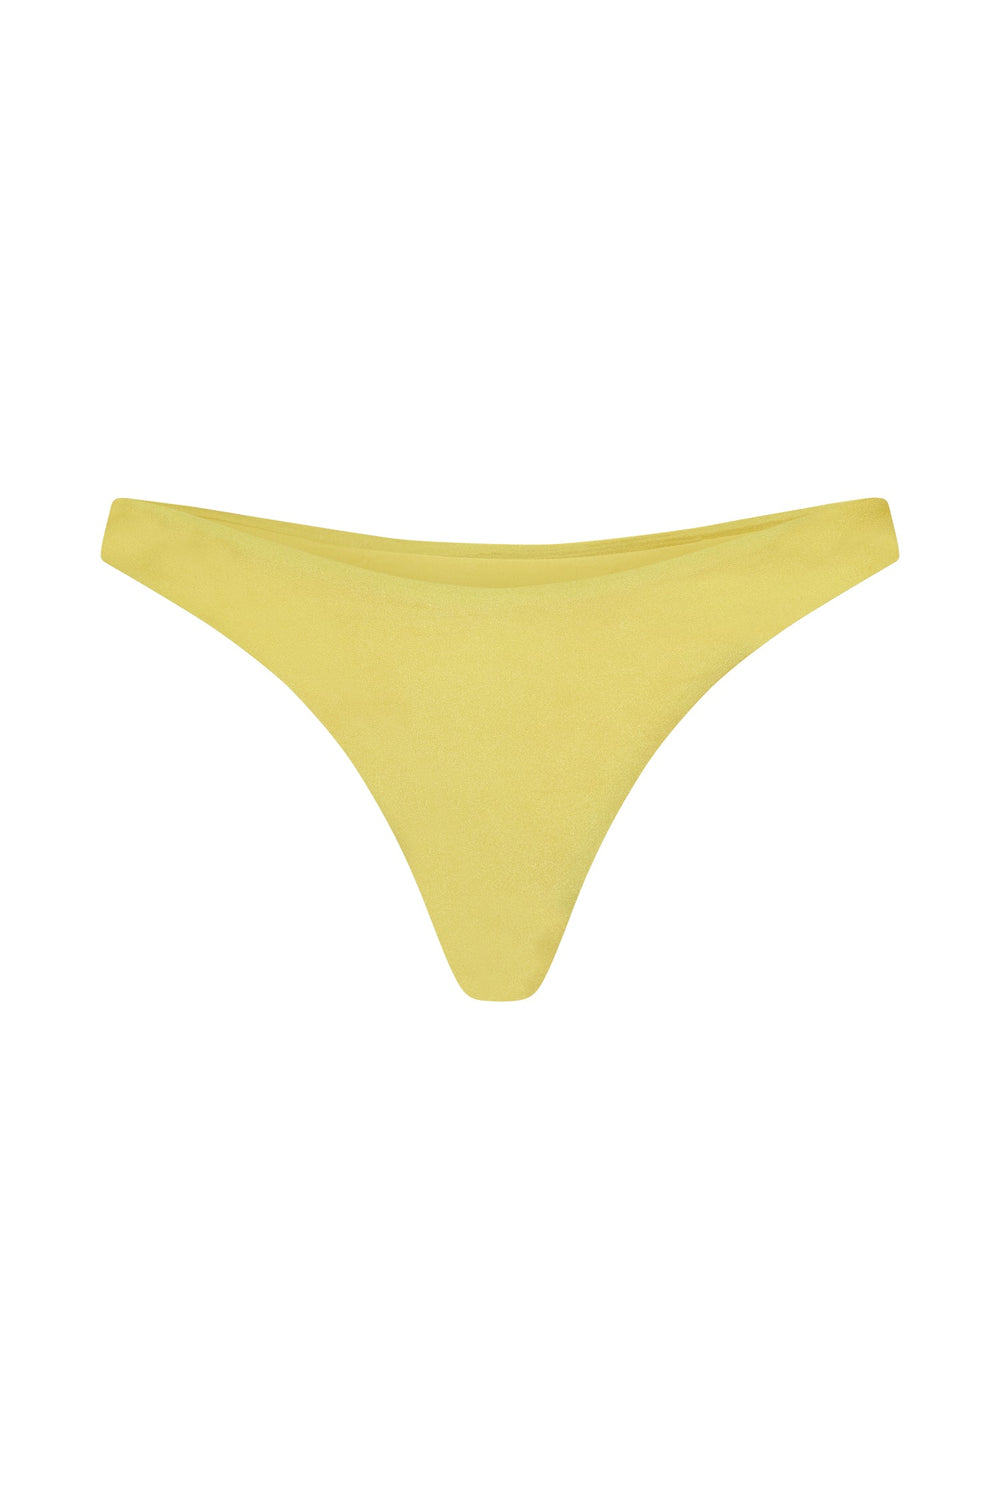 Bambi Cheeky Cut Bikini Bottoms - Canary Yellow